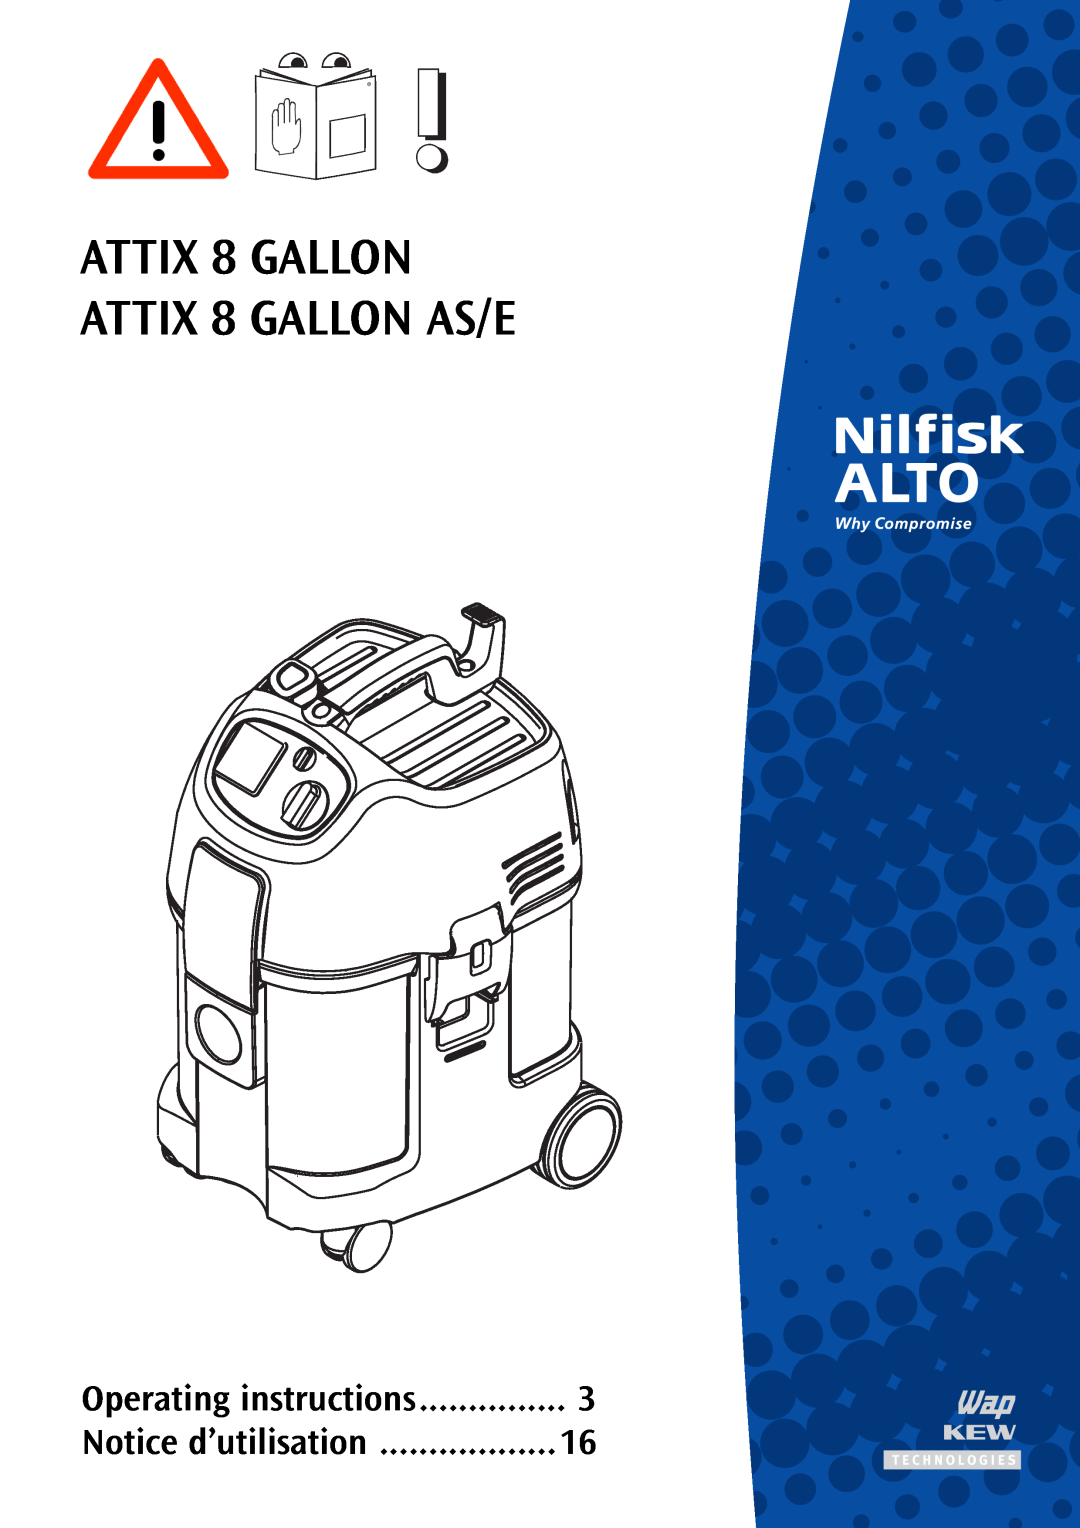 Nilfisk-ALTO 8 GALLON AE manual ATTIX 8 GALLON ATTIX 8 GALLON AS/E, Operating instructions, Notice d’utilisation 